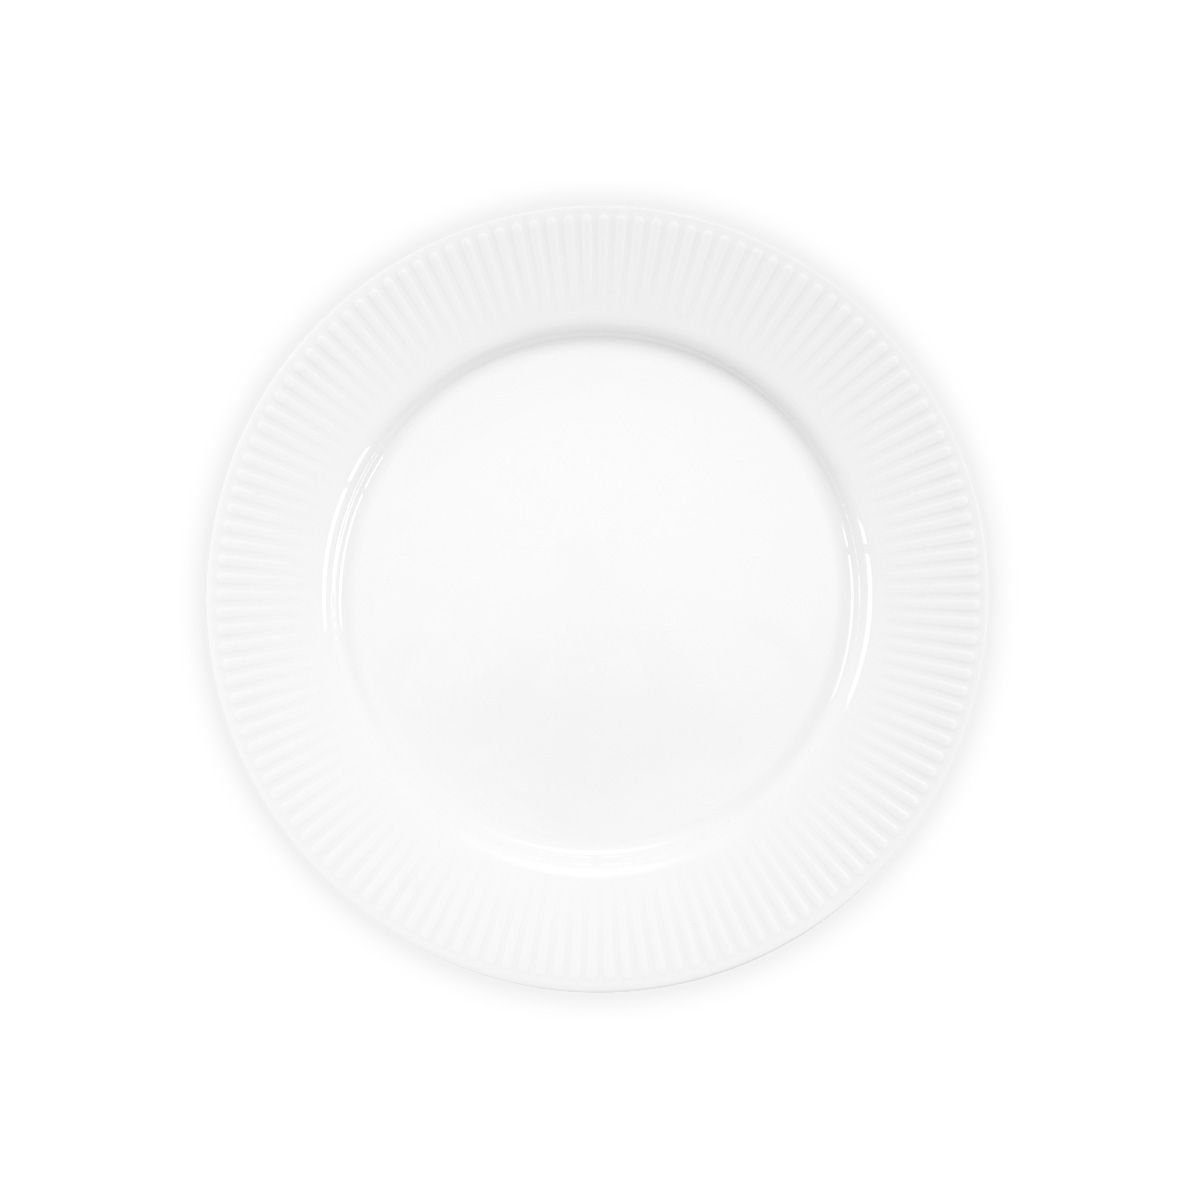 BODUM Douro pranzo in porcellana bianca, 4 pezzi.